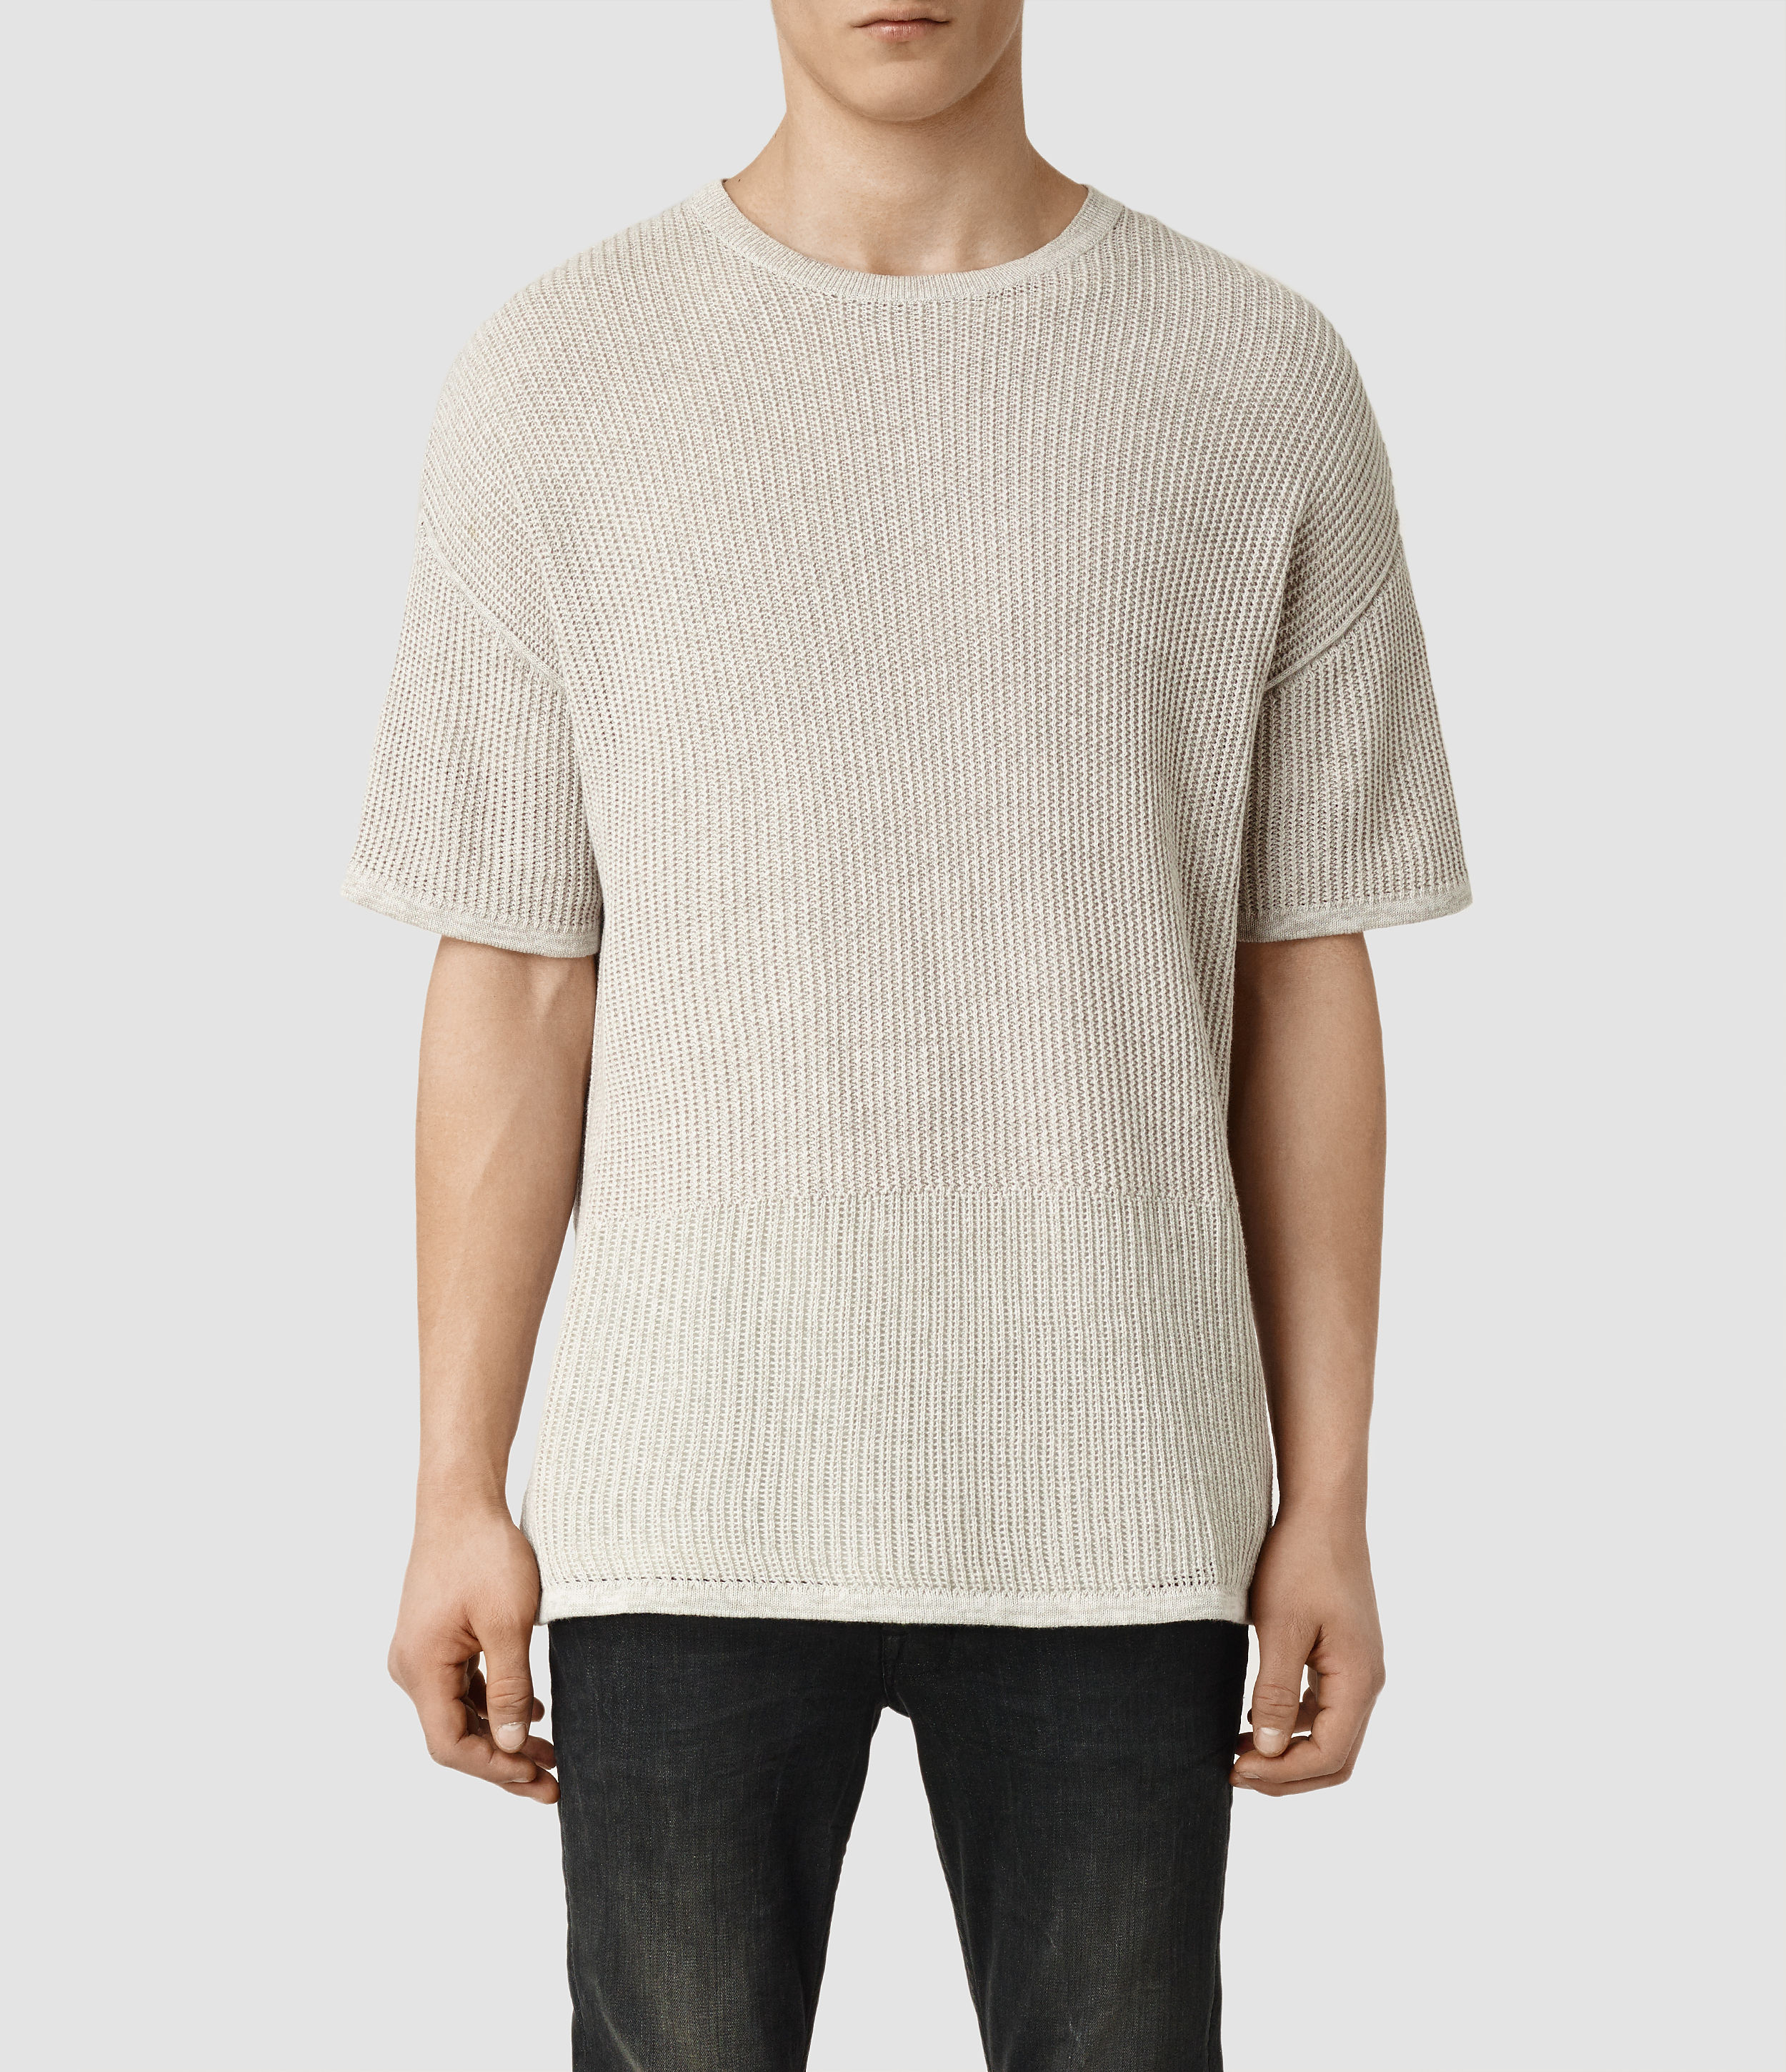 Casual Shirts 2015 Men camisa social slim Clothing Cotton